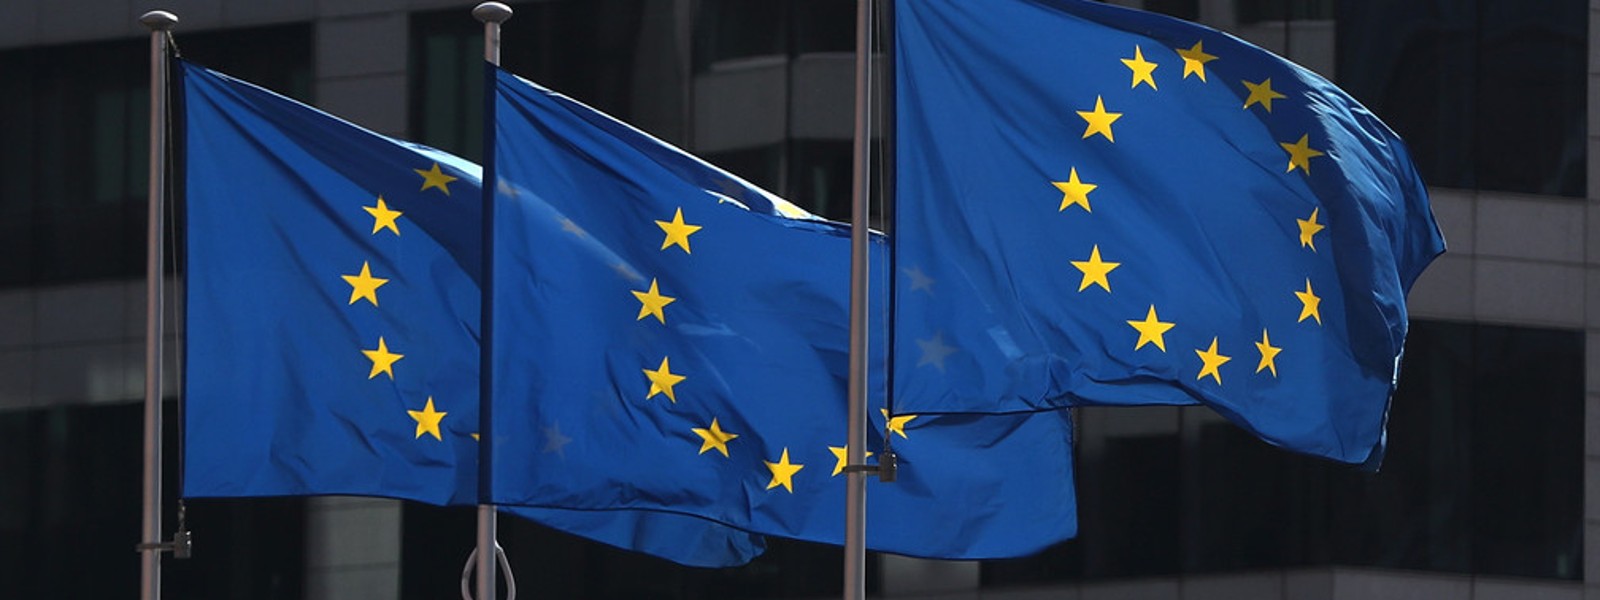 EU calls for peaceful transition